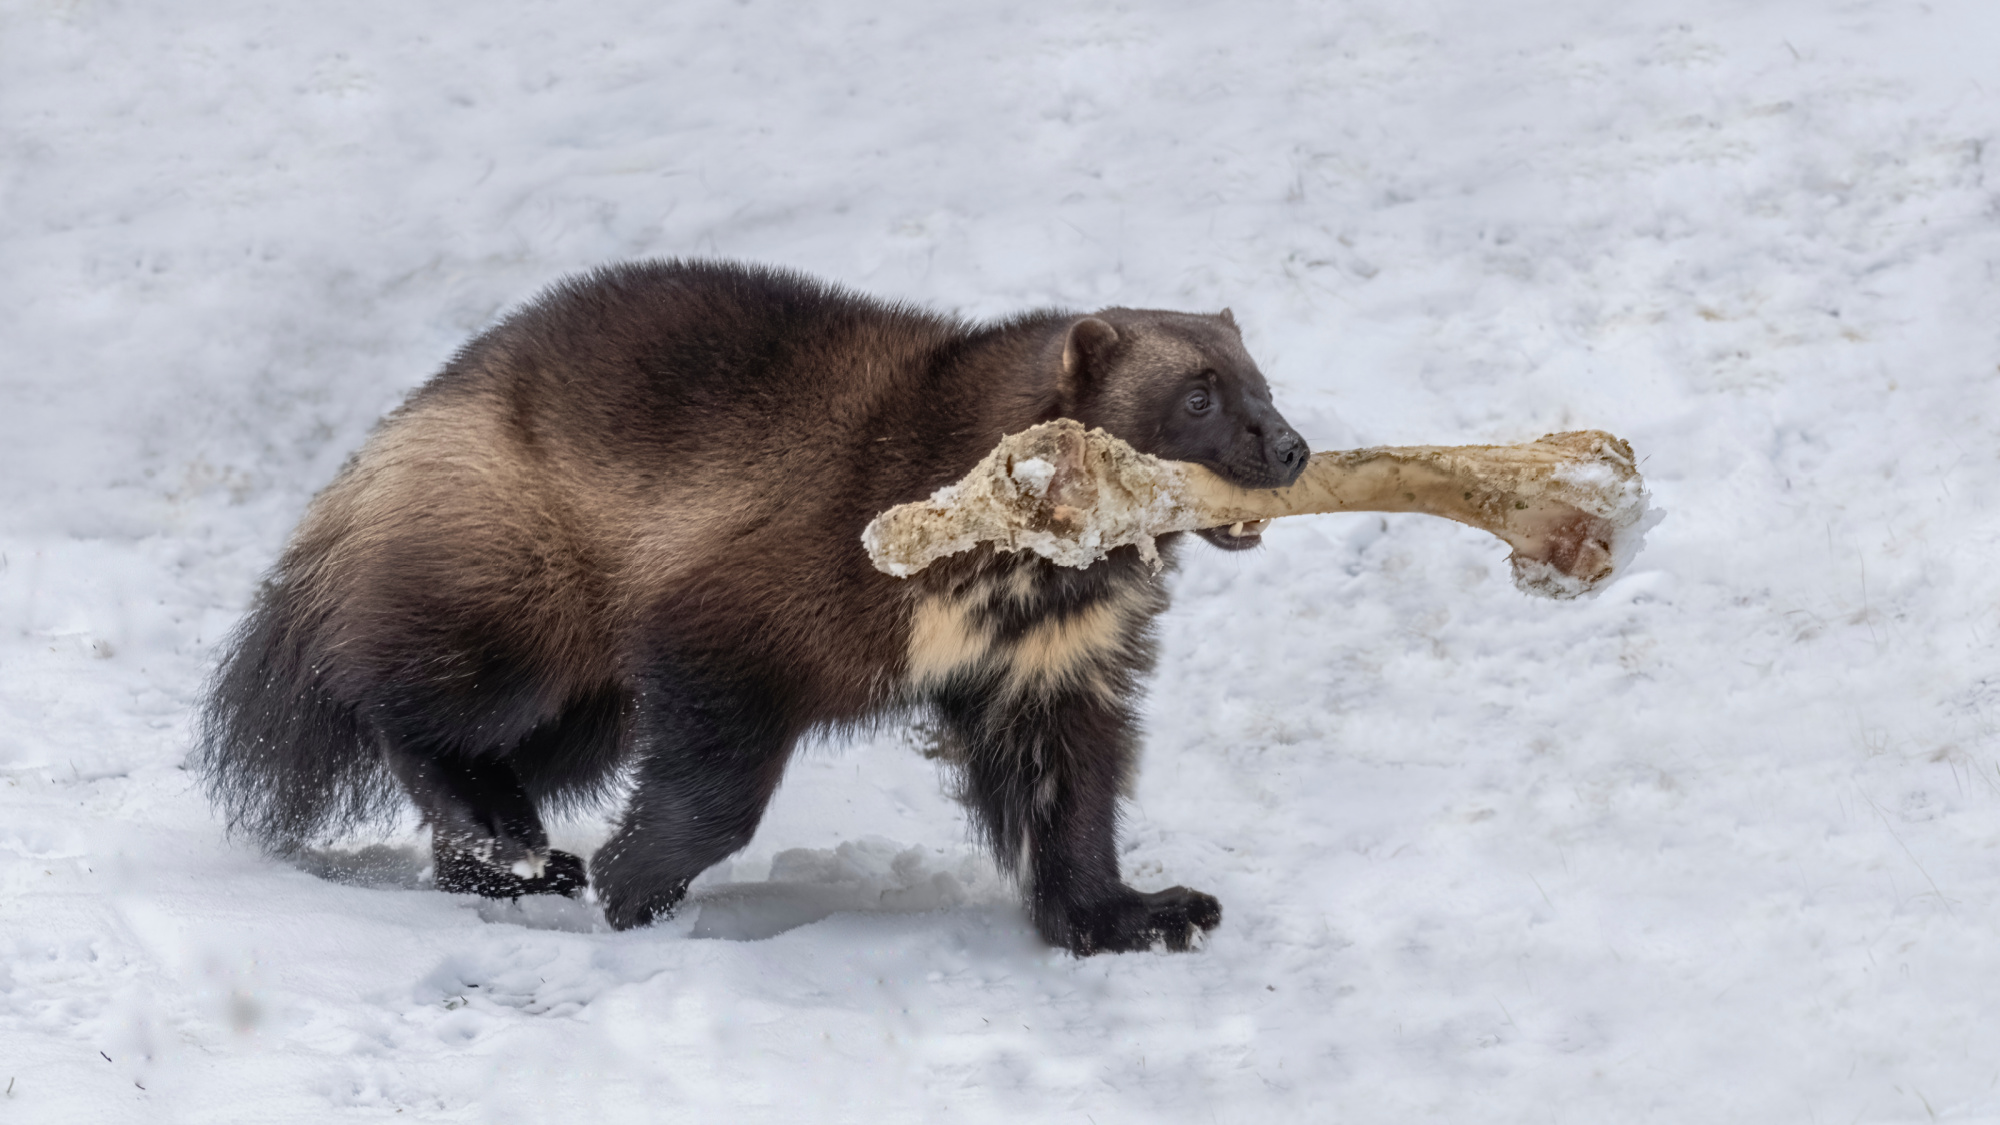 wolverine carrying moose bone